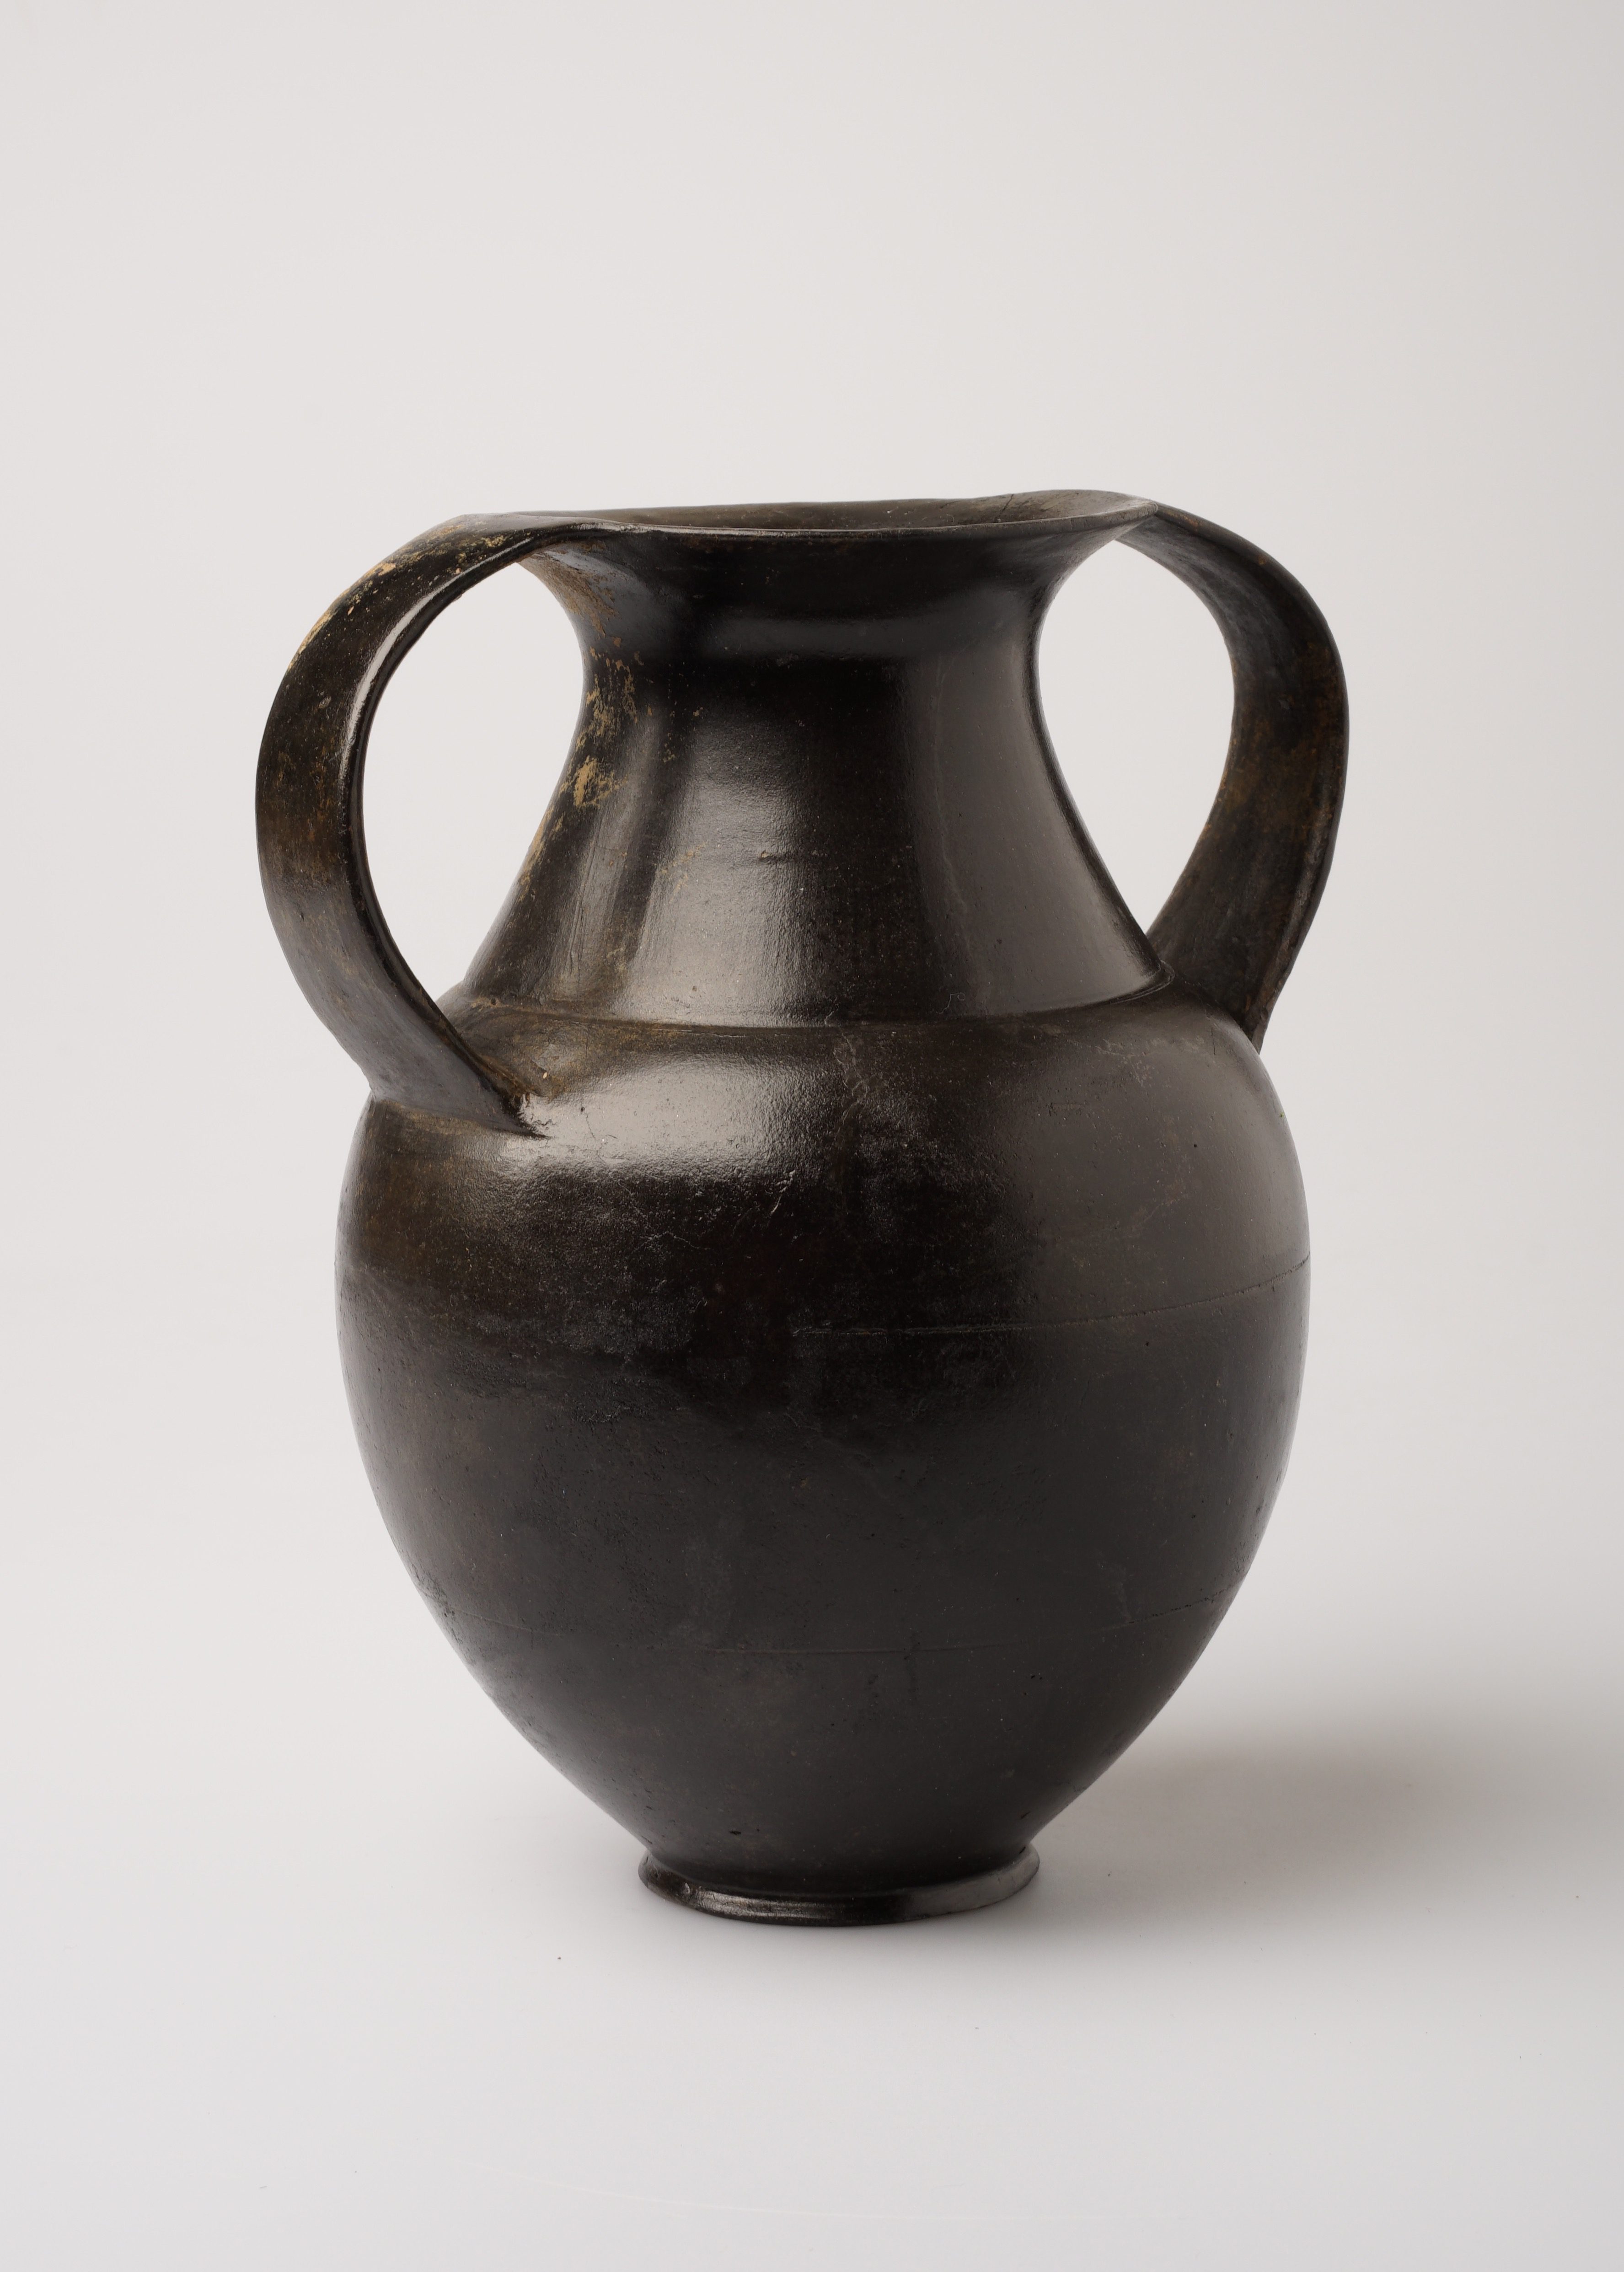 Etruscan ceramics after conservation